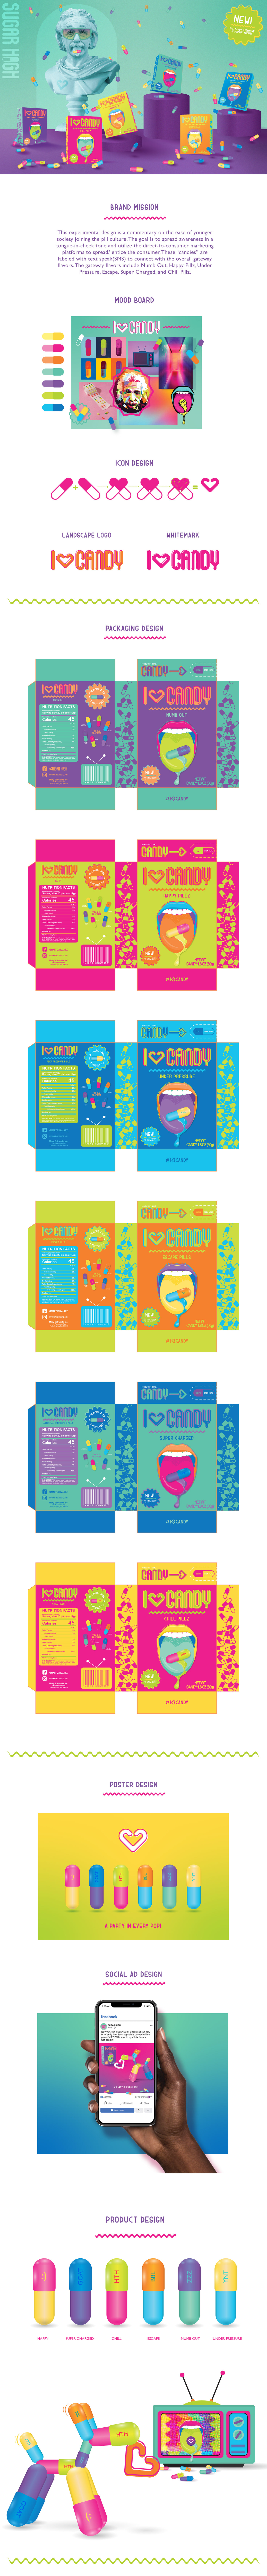 Candy einstein's dreams Just for fun Media Design packaging design Pillz vector